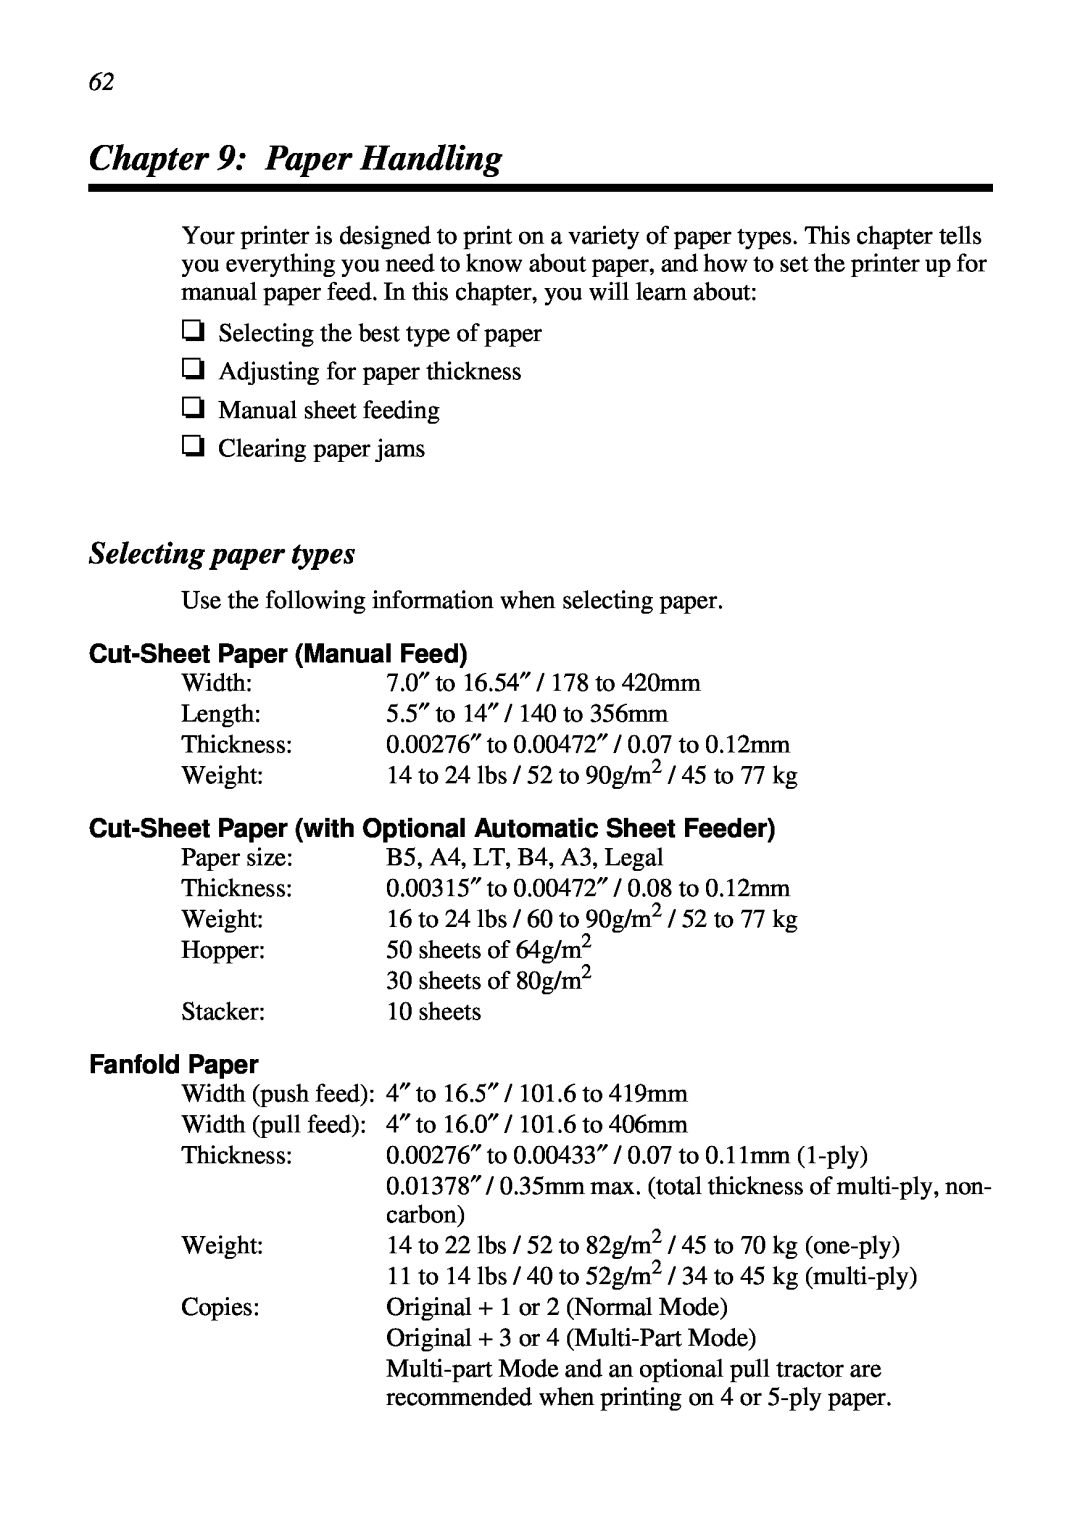 Star Micronics DOT MATRIX PRINTERS Paper Handling, Selecting paper types, Cut-Sheet Paper Manual Feed, Fanfold Paper 